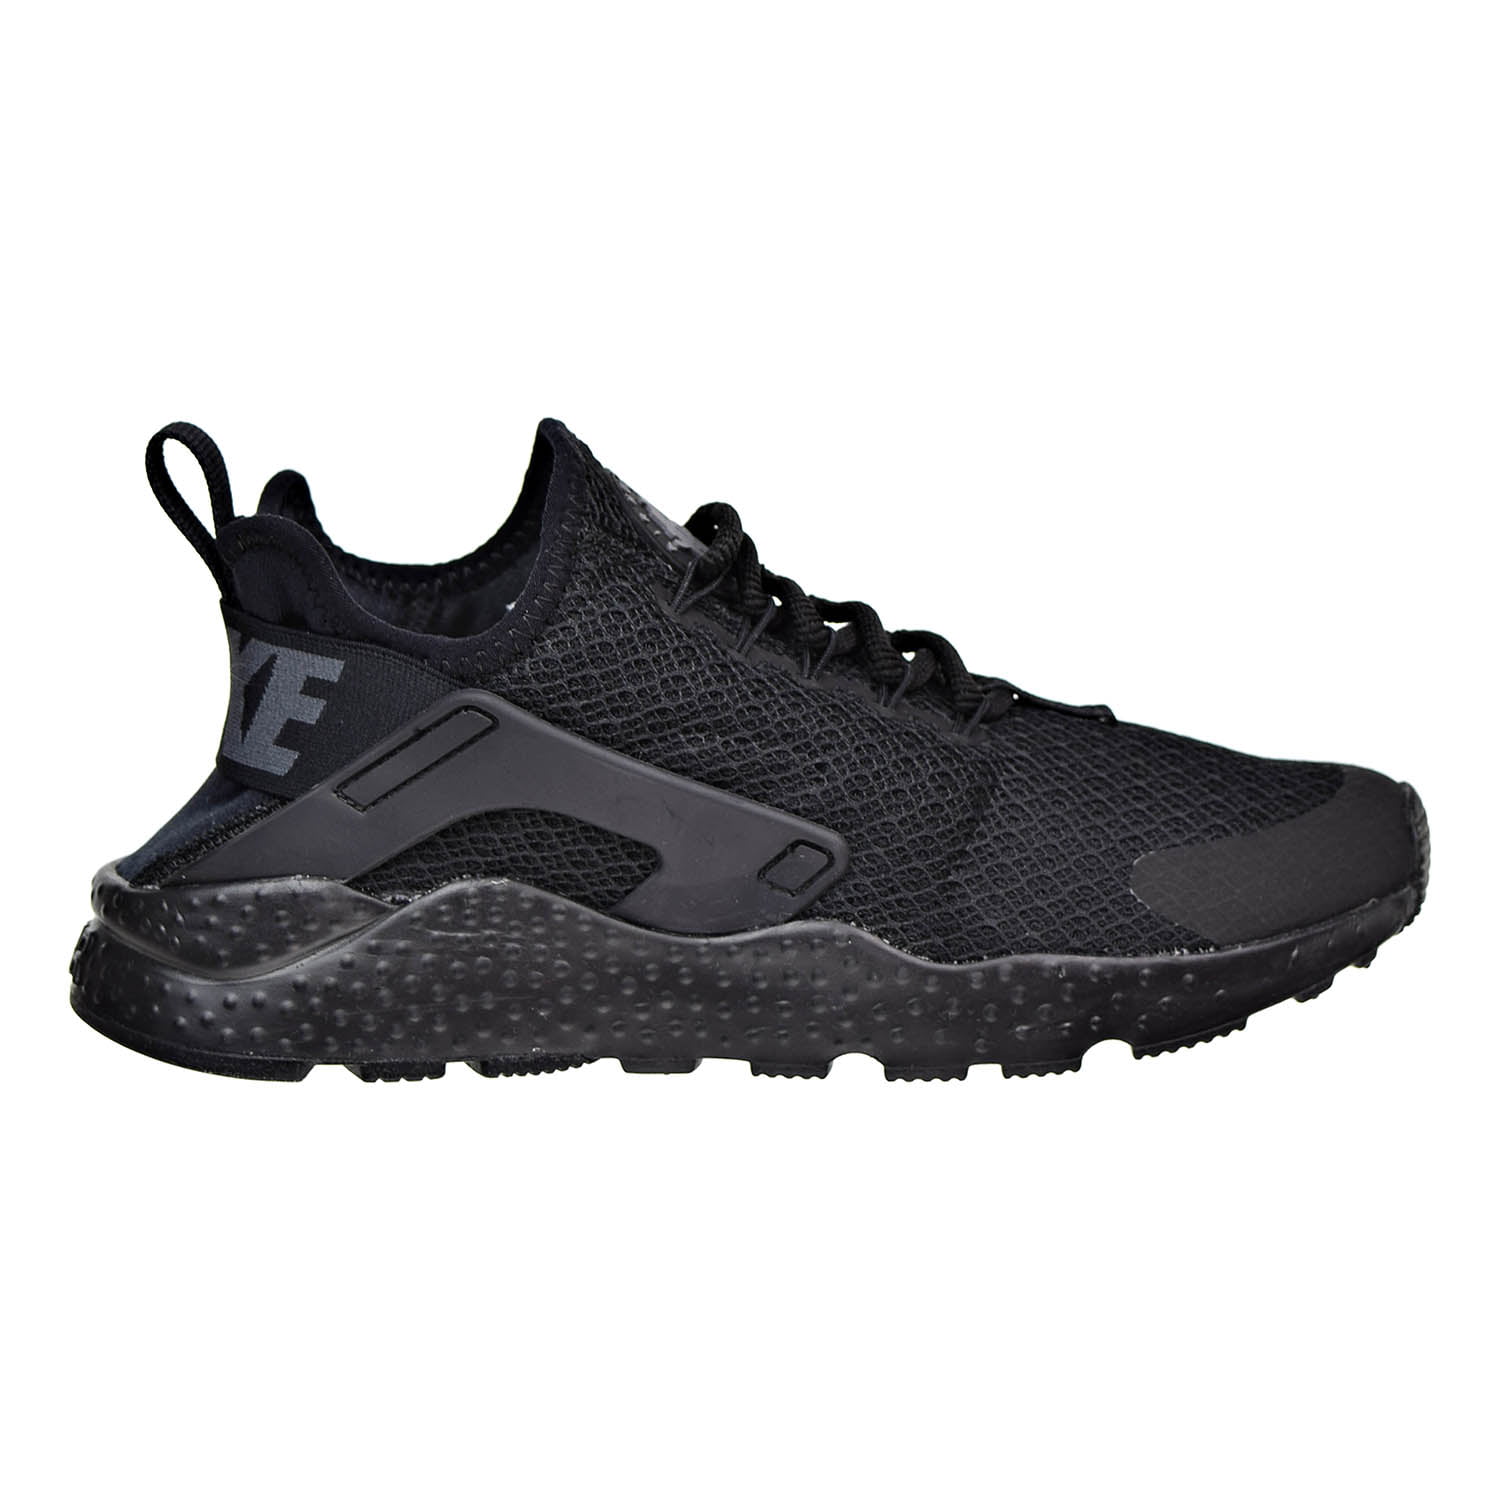 Nike Air Huarache Run Women's Shoes Black/Dark Grey 819151-011 - Walmart.com